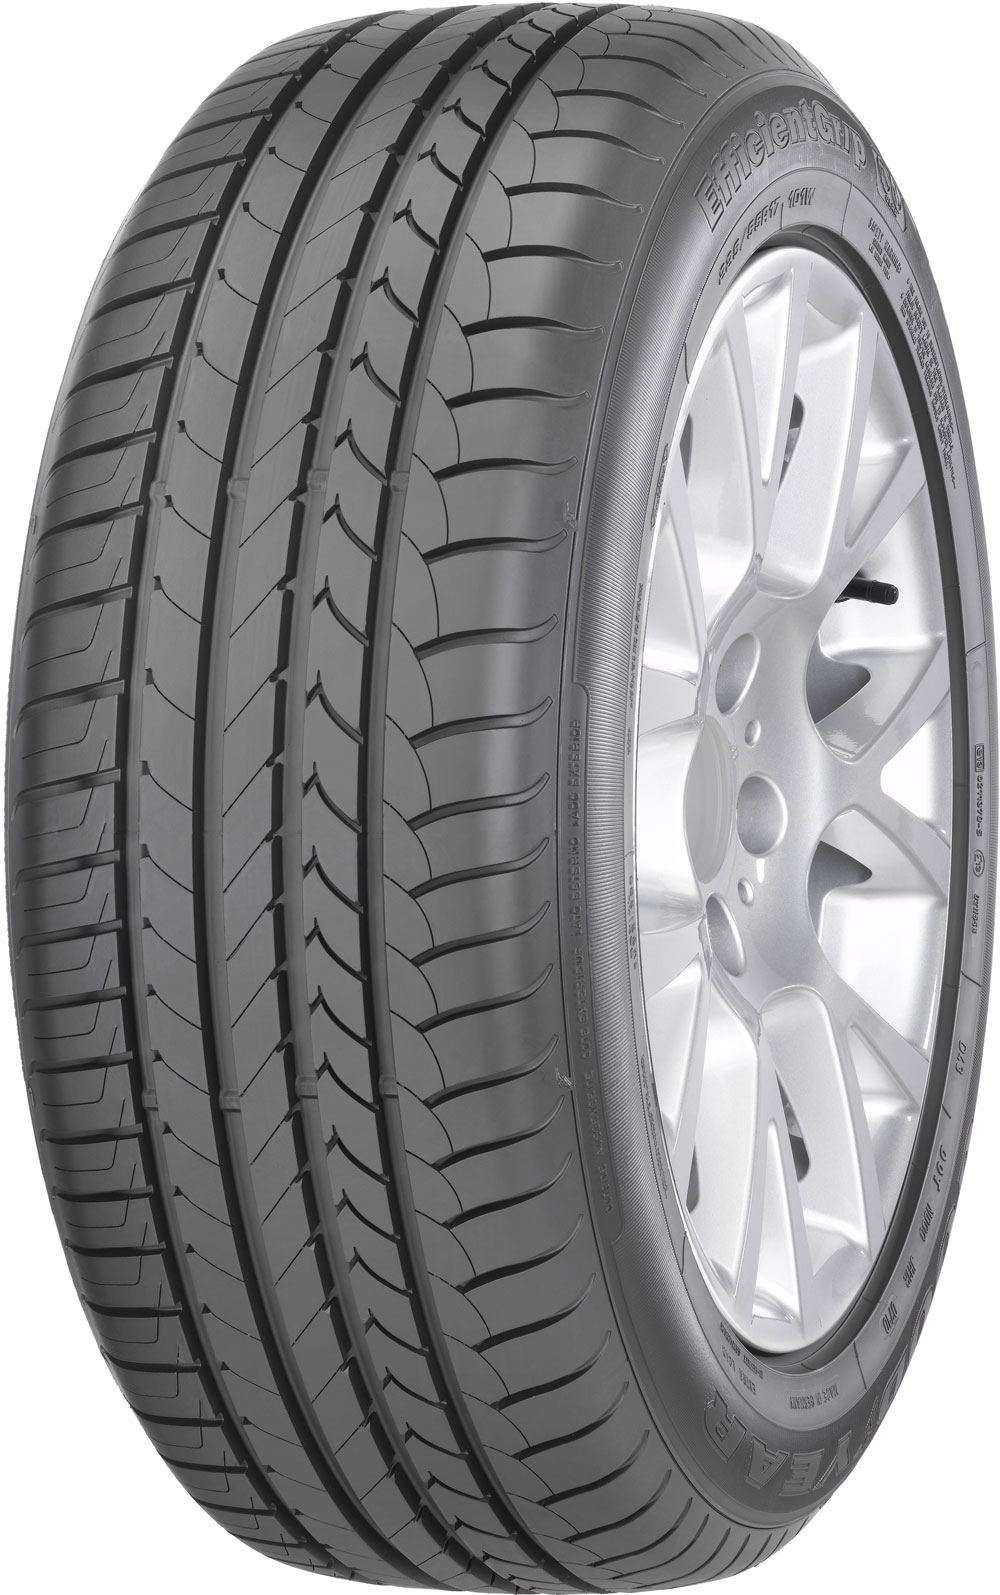 Автомобилни гуми GOODYEAR EFFICIENT GRIP XL RFT MERCEDES 245/45 R19 102